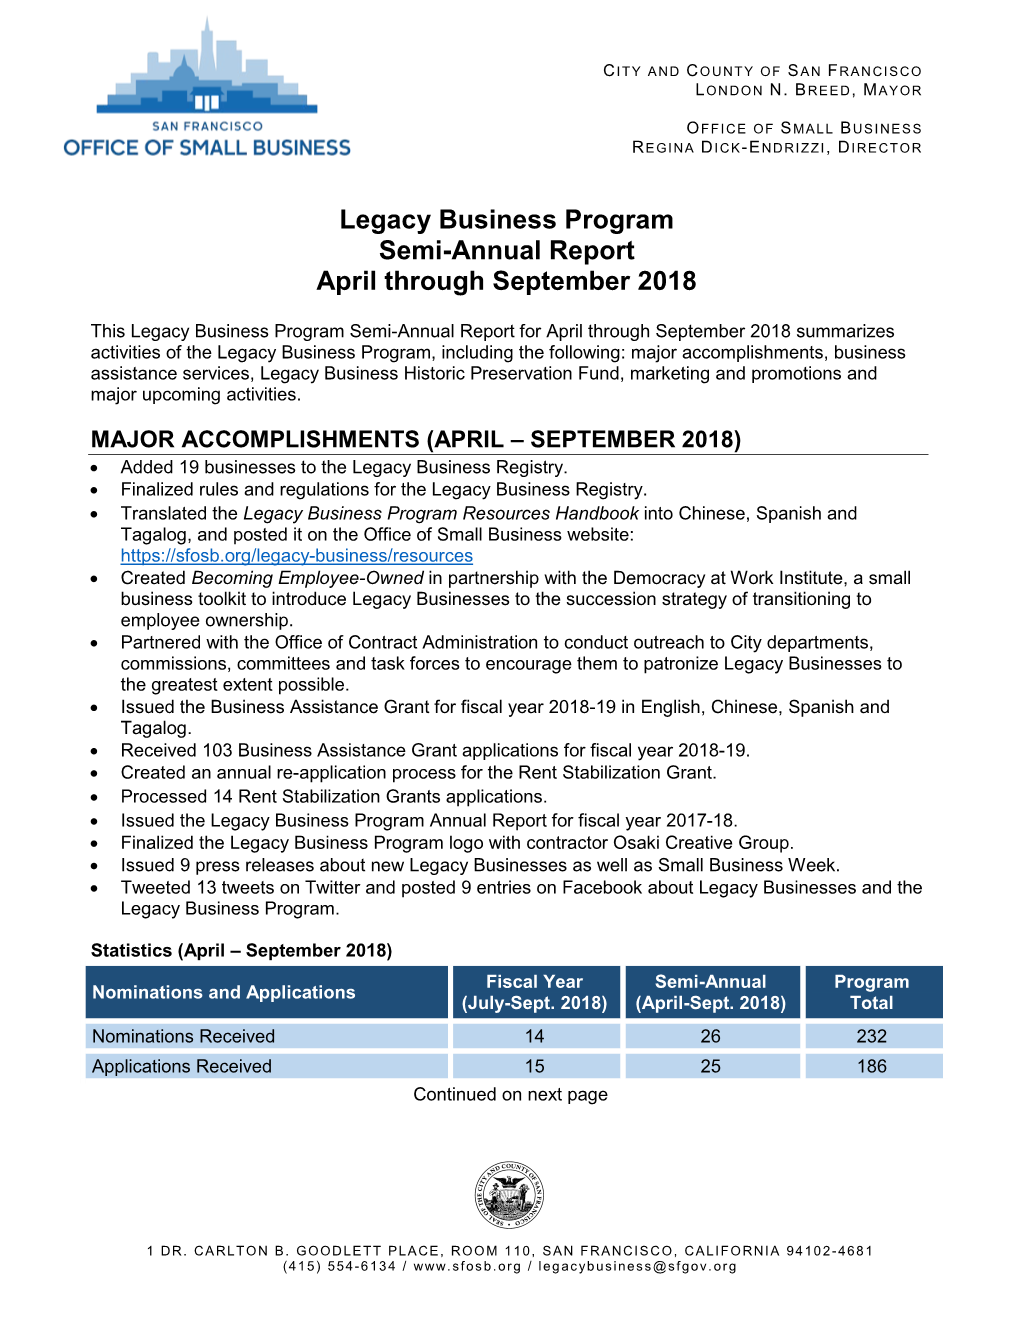 Legacy Business Program Semi-Annual Report, April Through